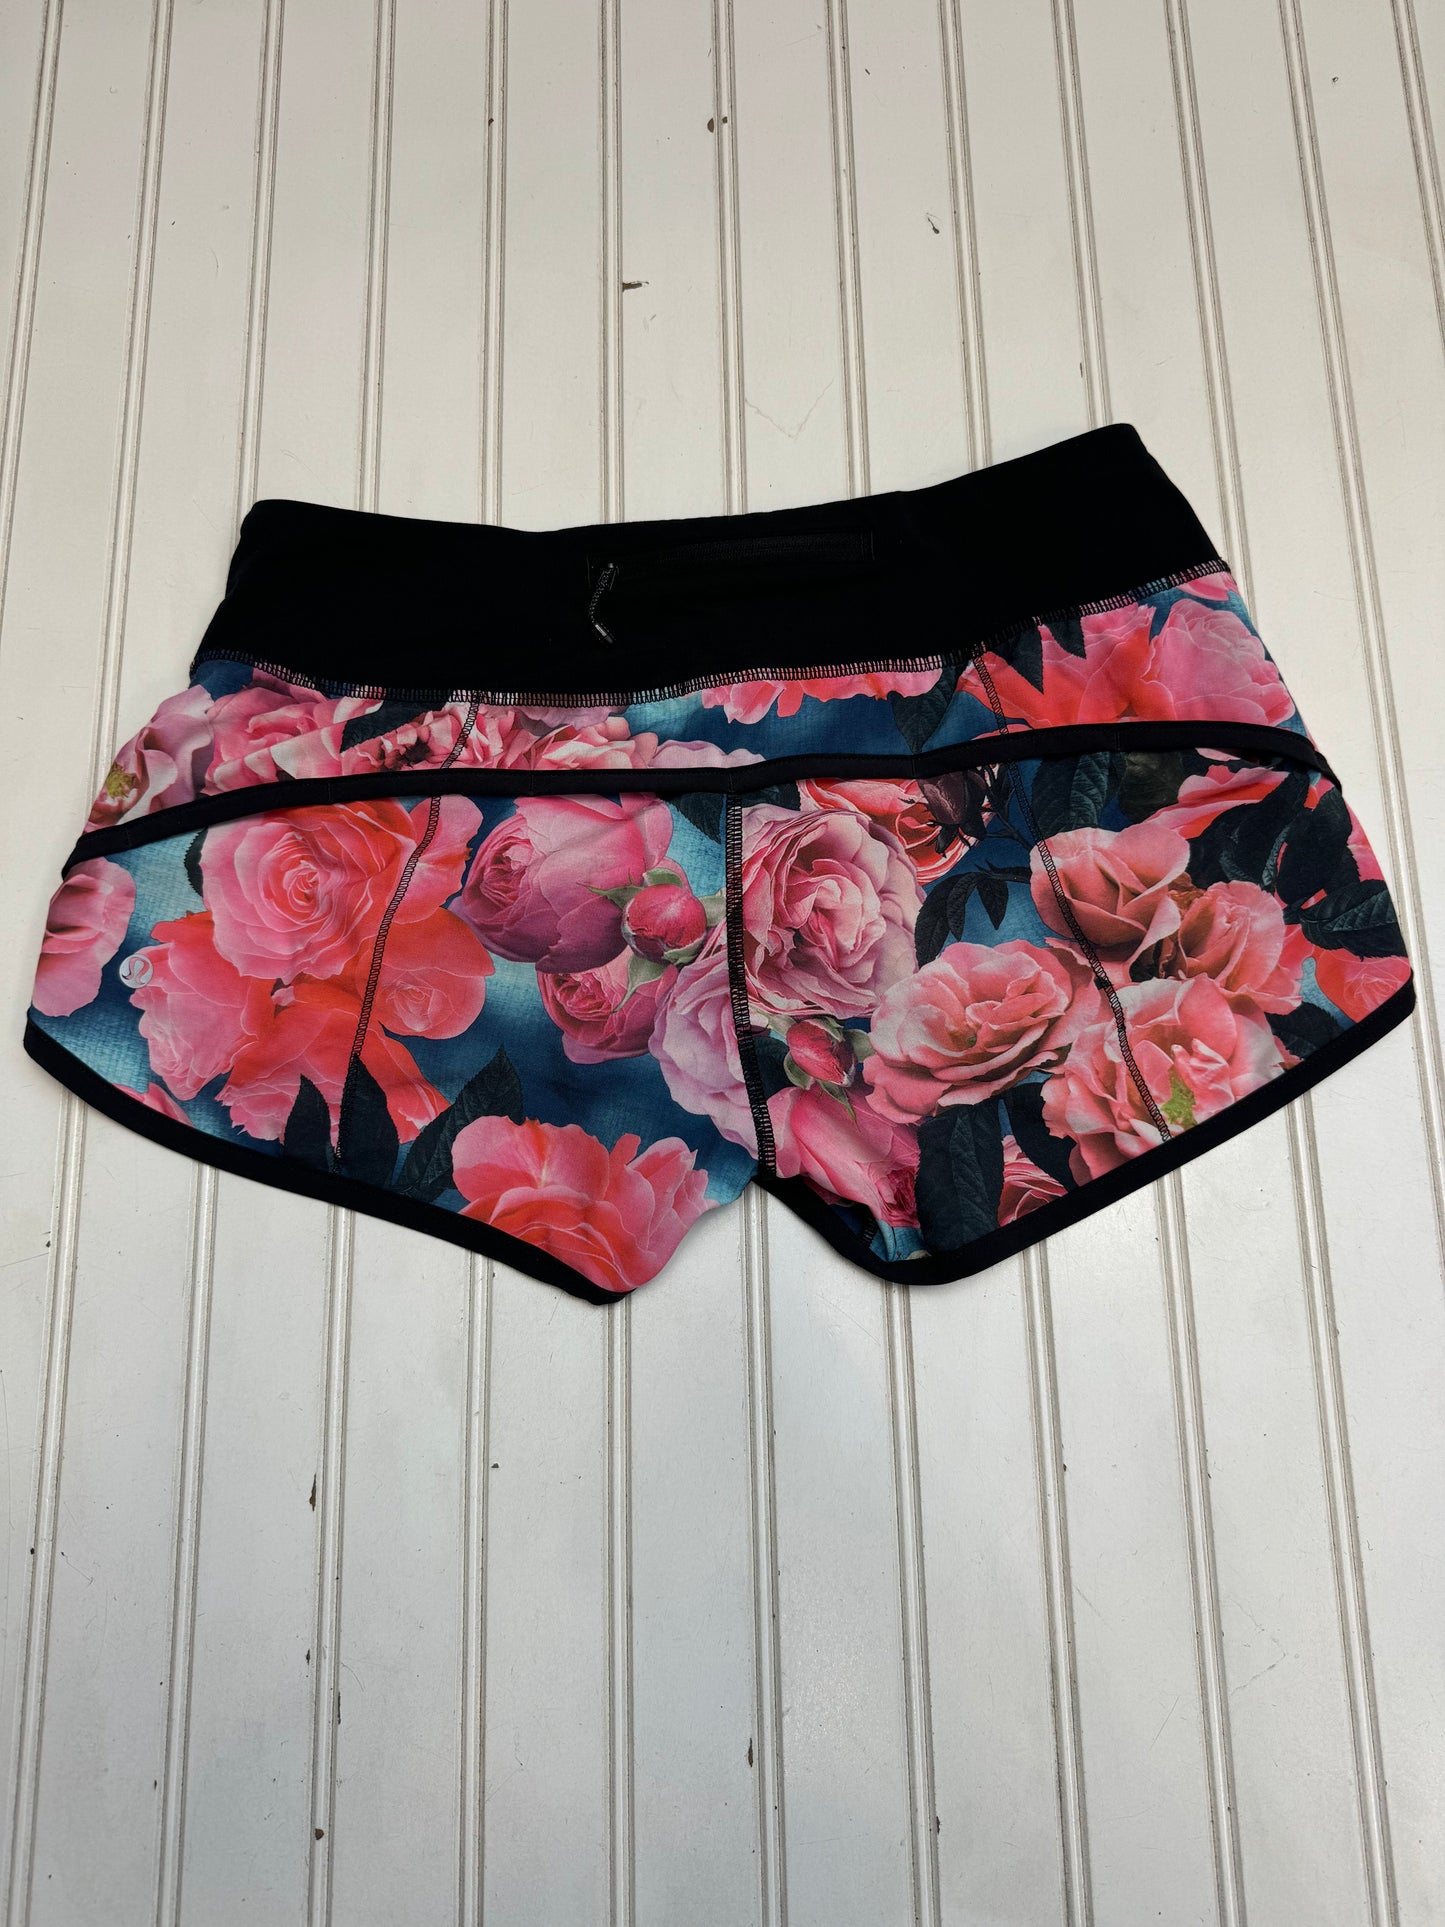 Floral Print Athletic Shorts Lululemon, Size 6